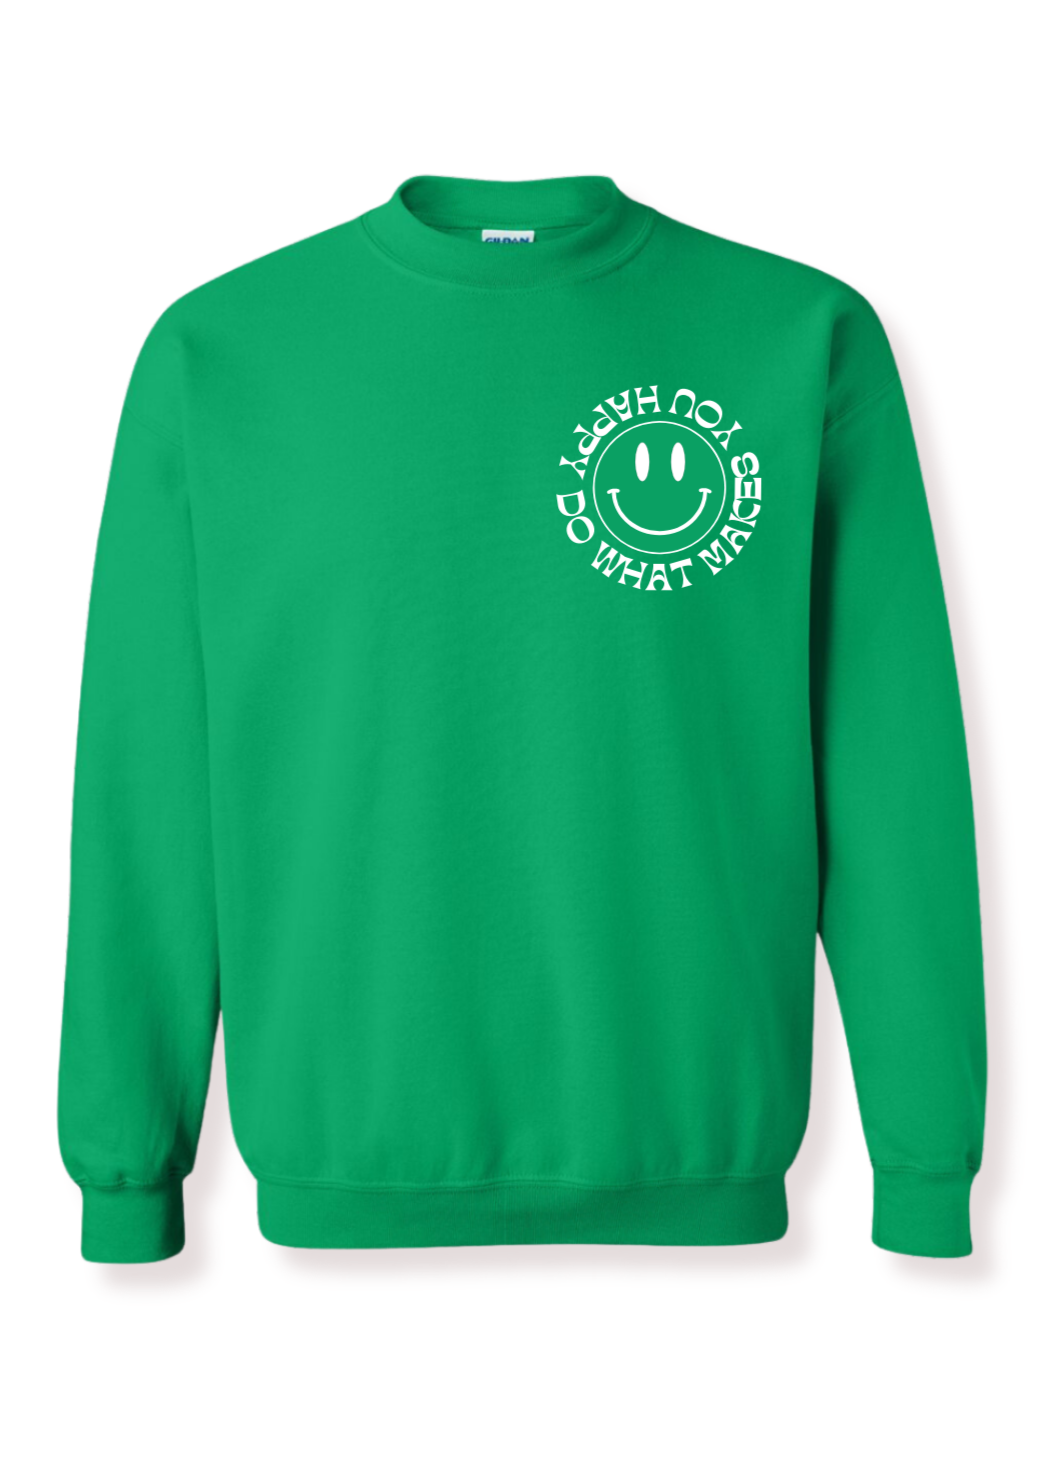 green do what makes you happy crewneck sweatshirt